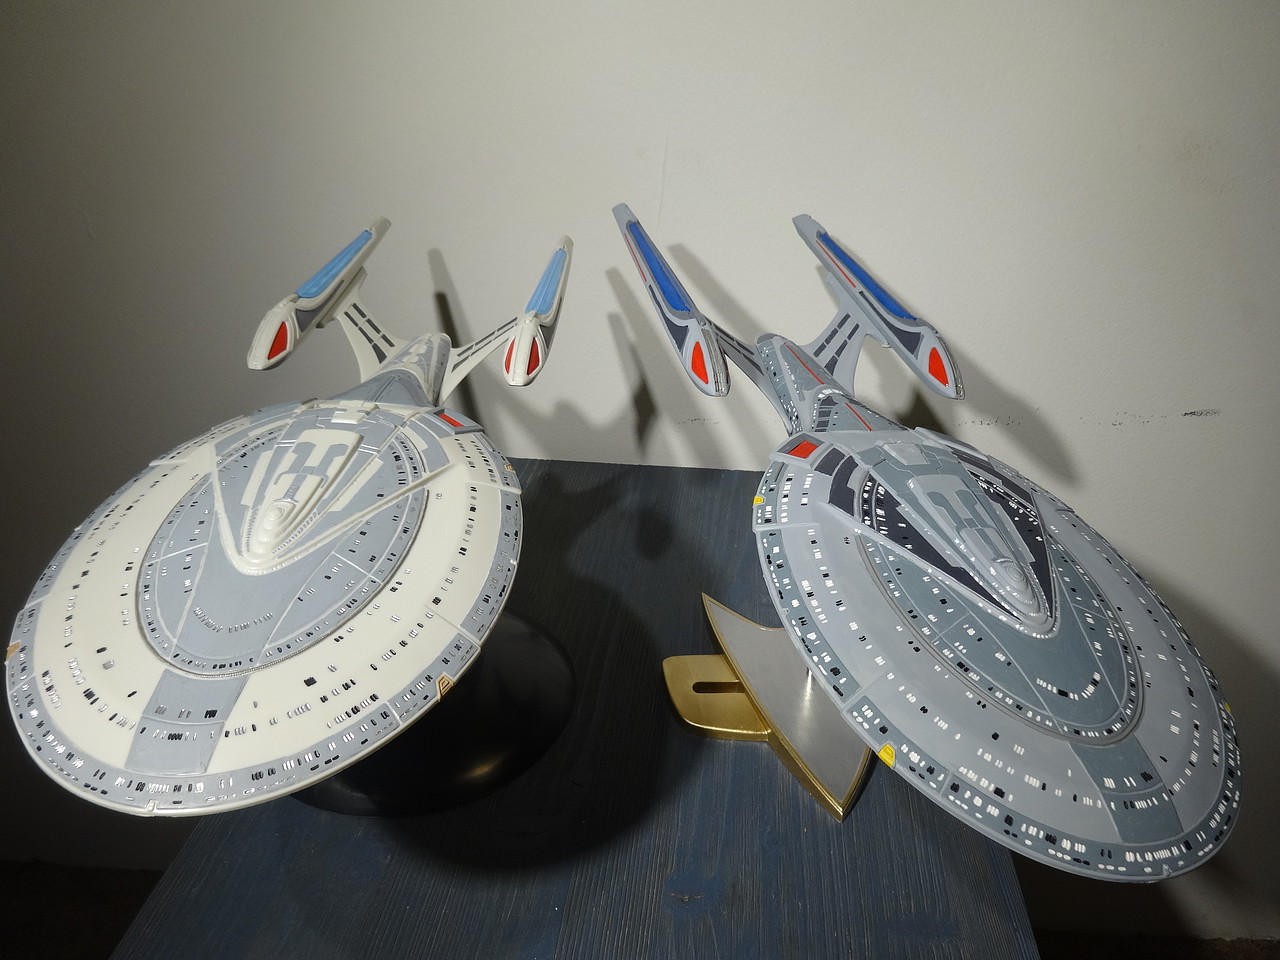 star trek toy ships for sale